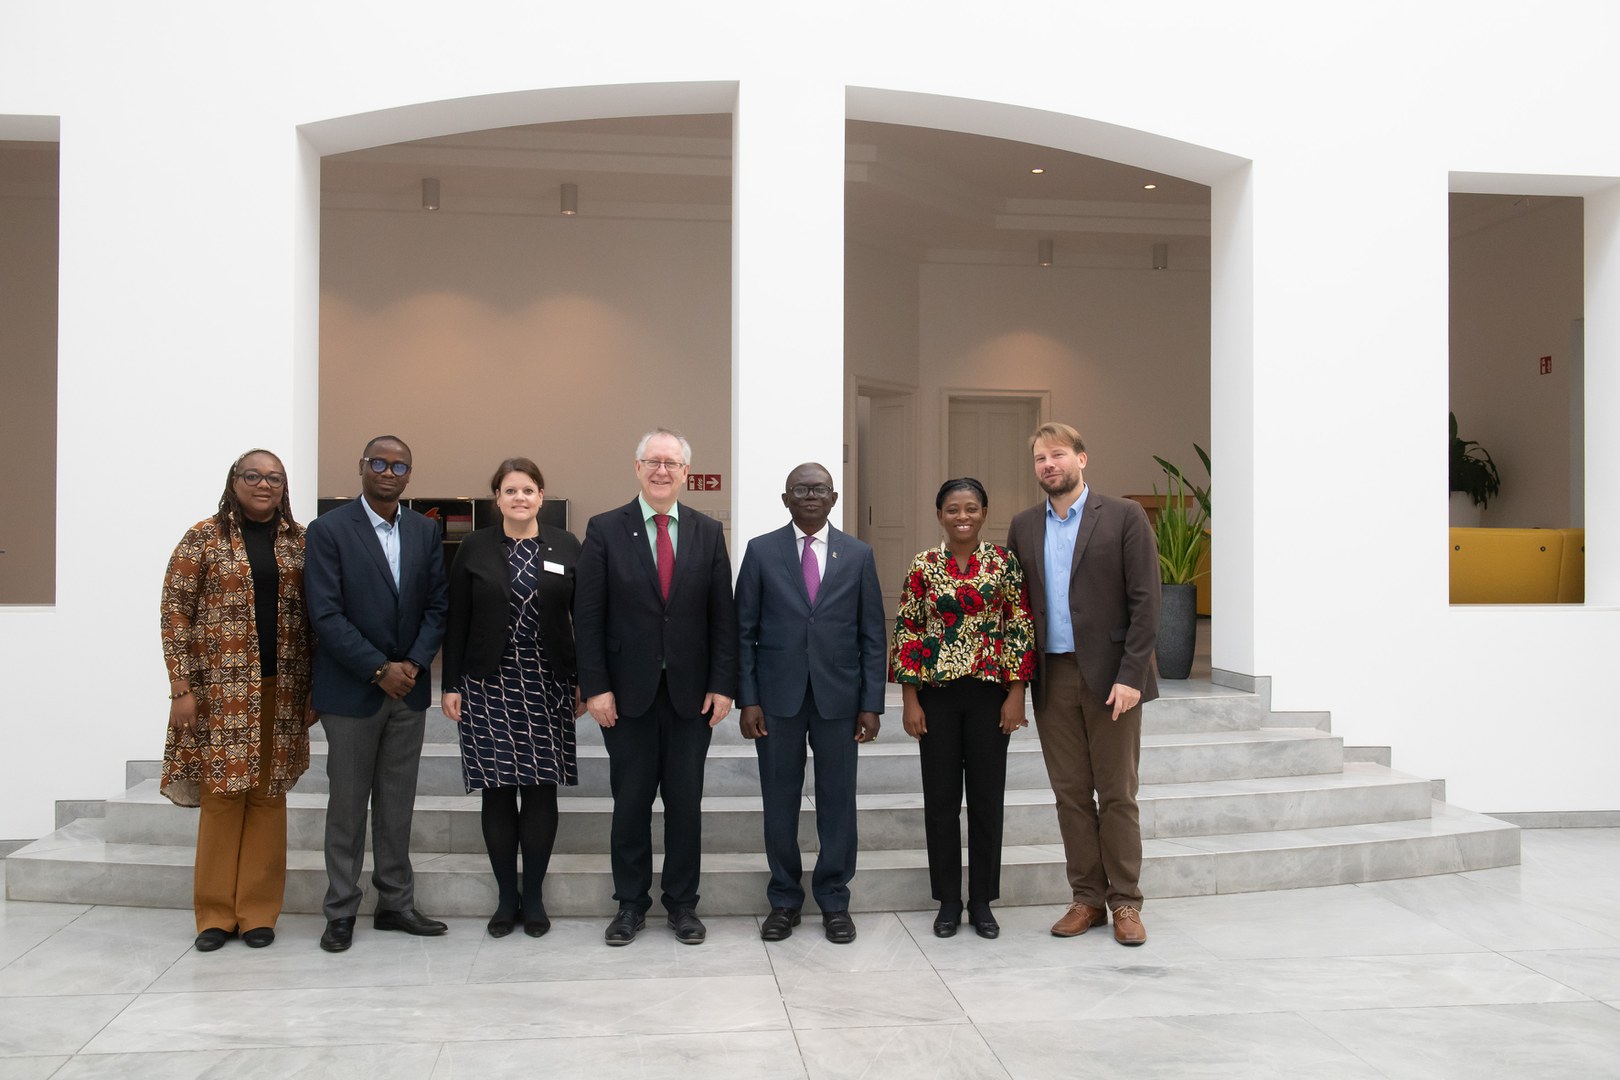 The delegation of the strategic partner university Ghana was a guest in Bonn.